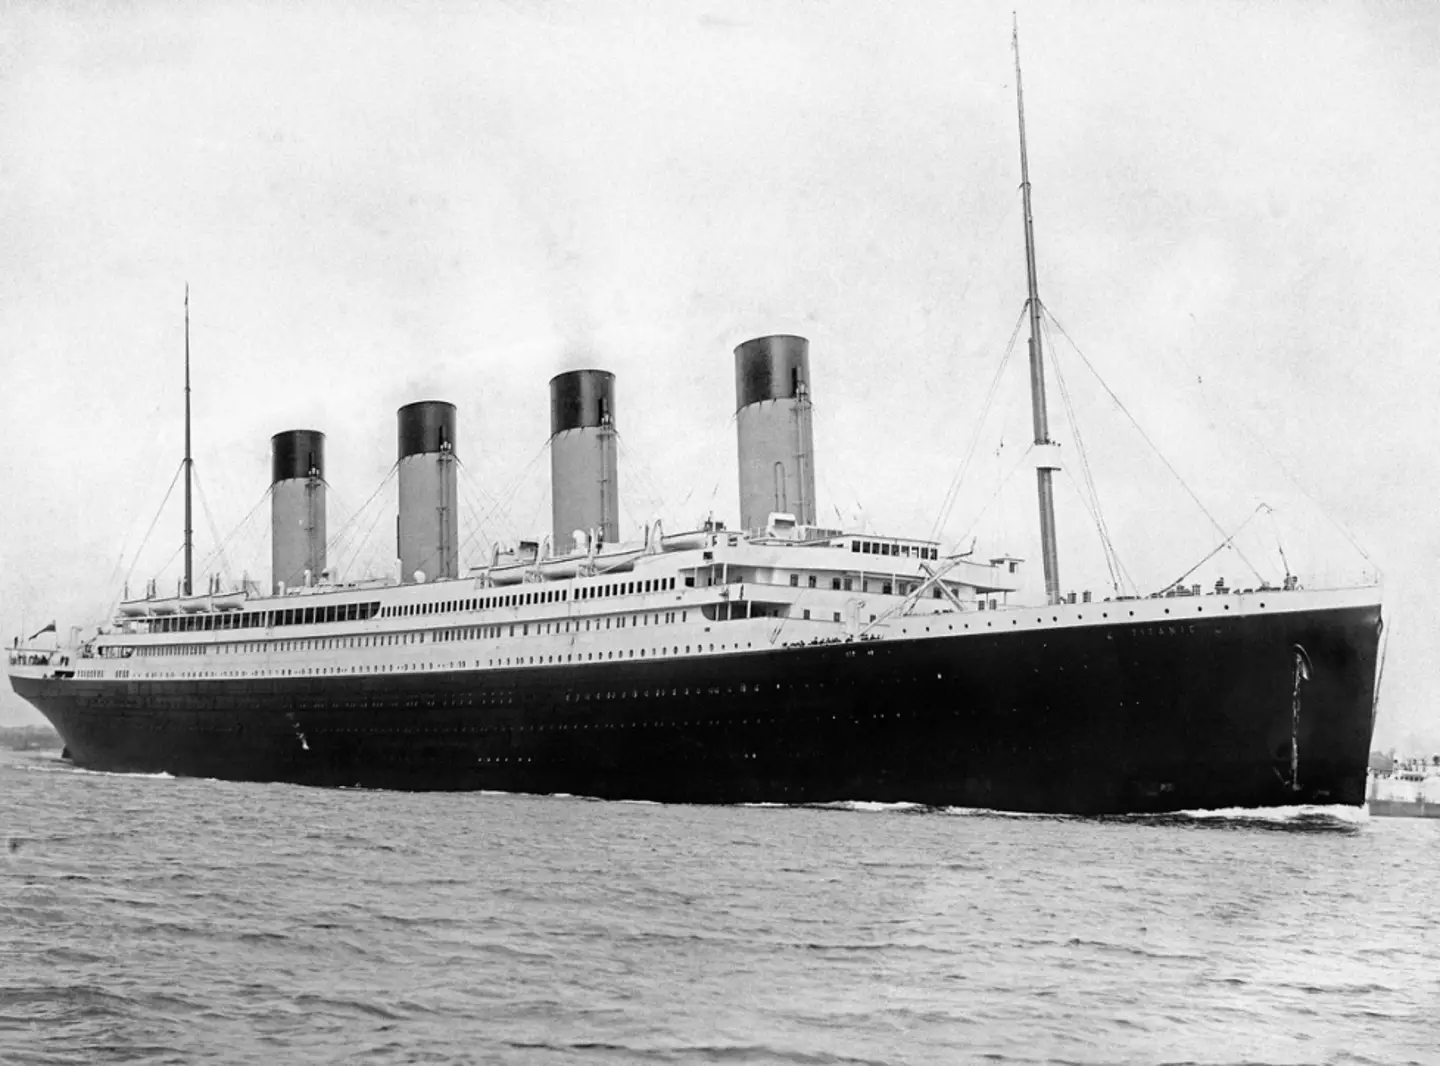 The Titanic sank in the Atlantic Ocean in 1912.